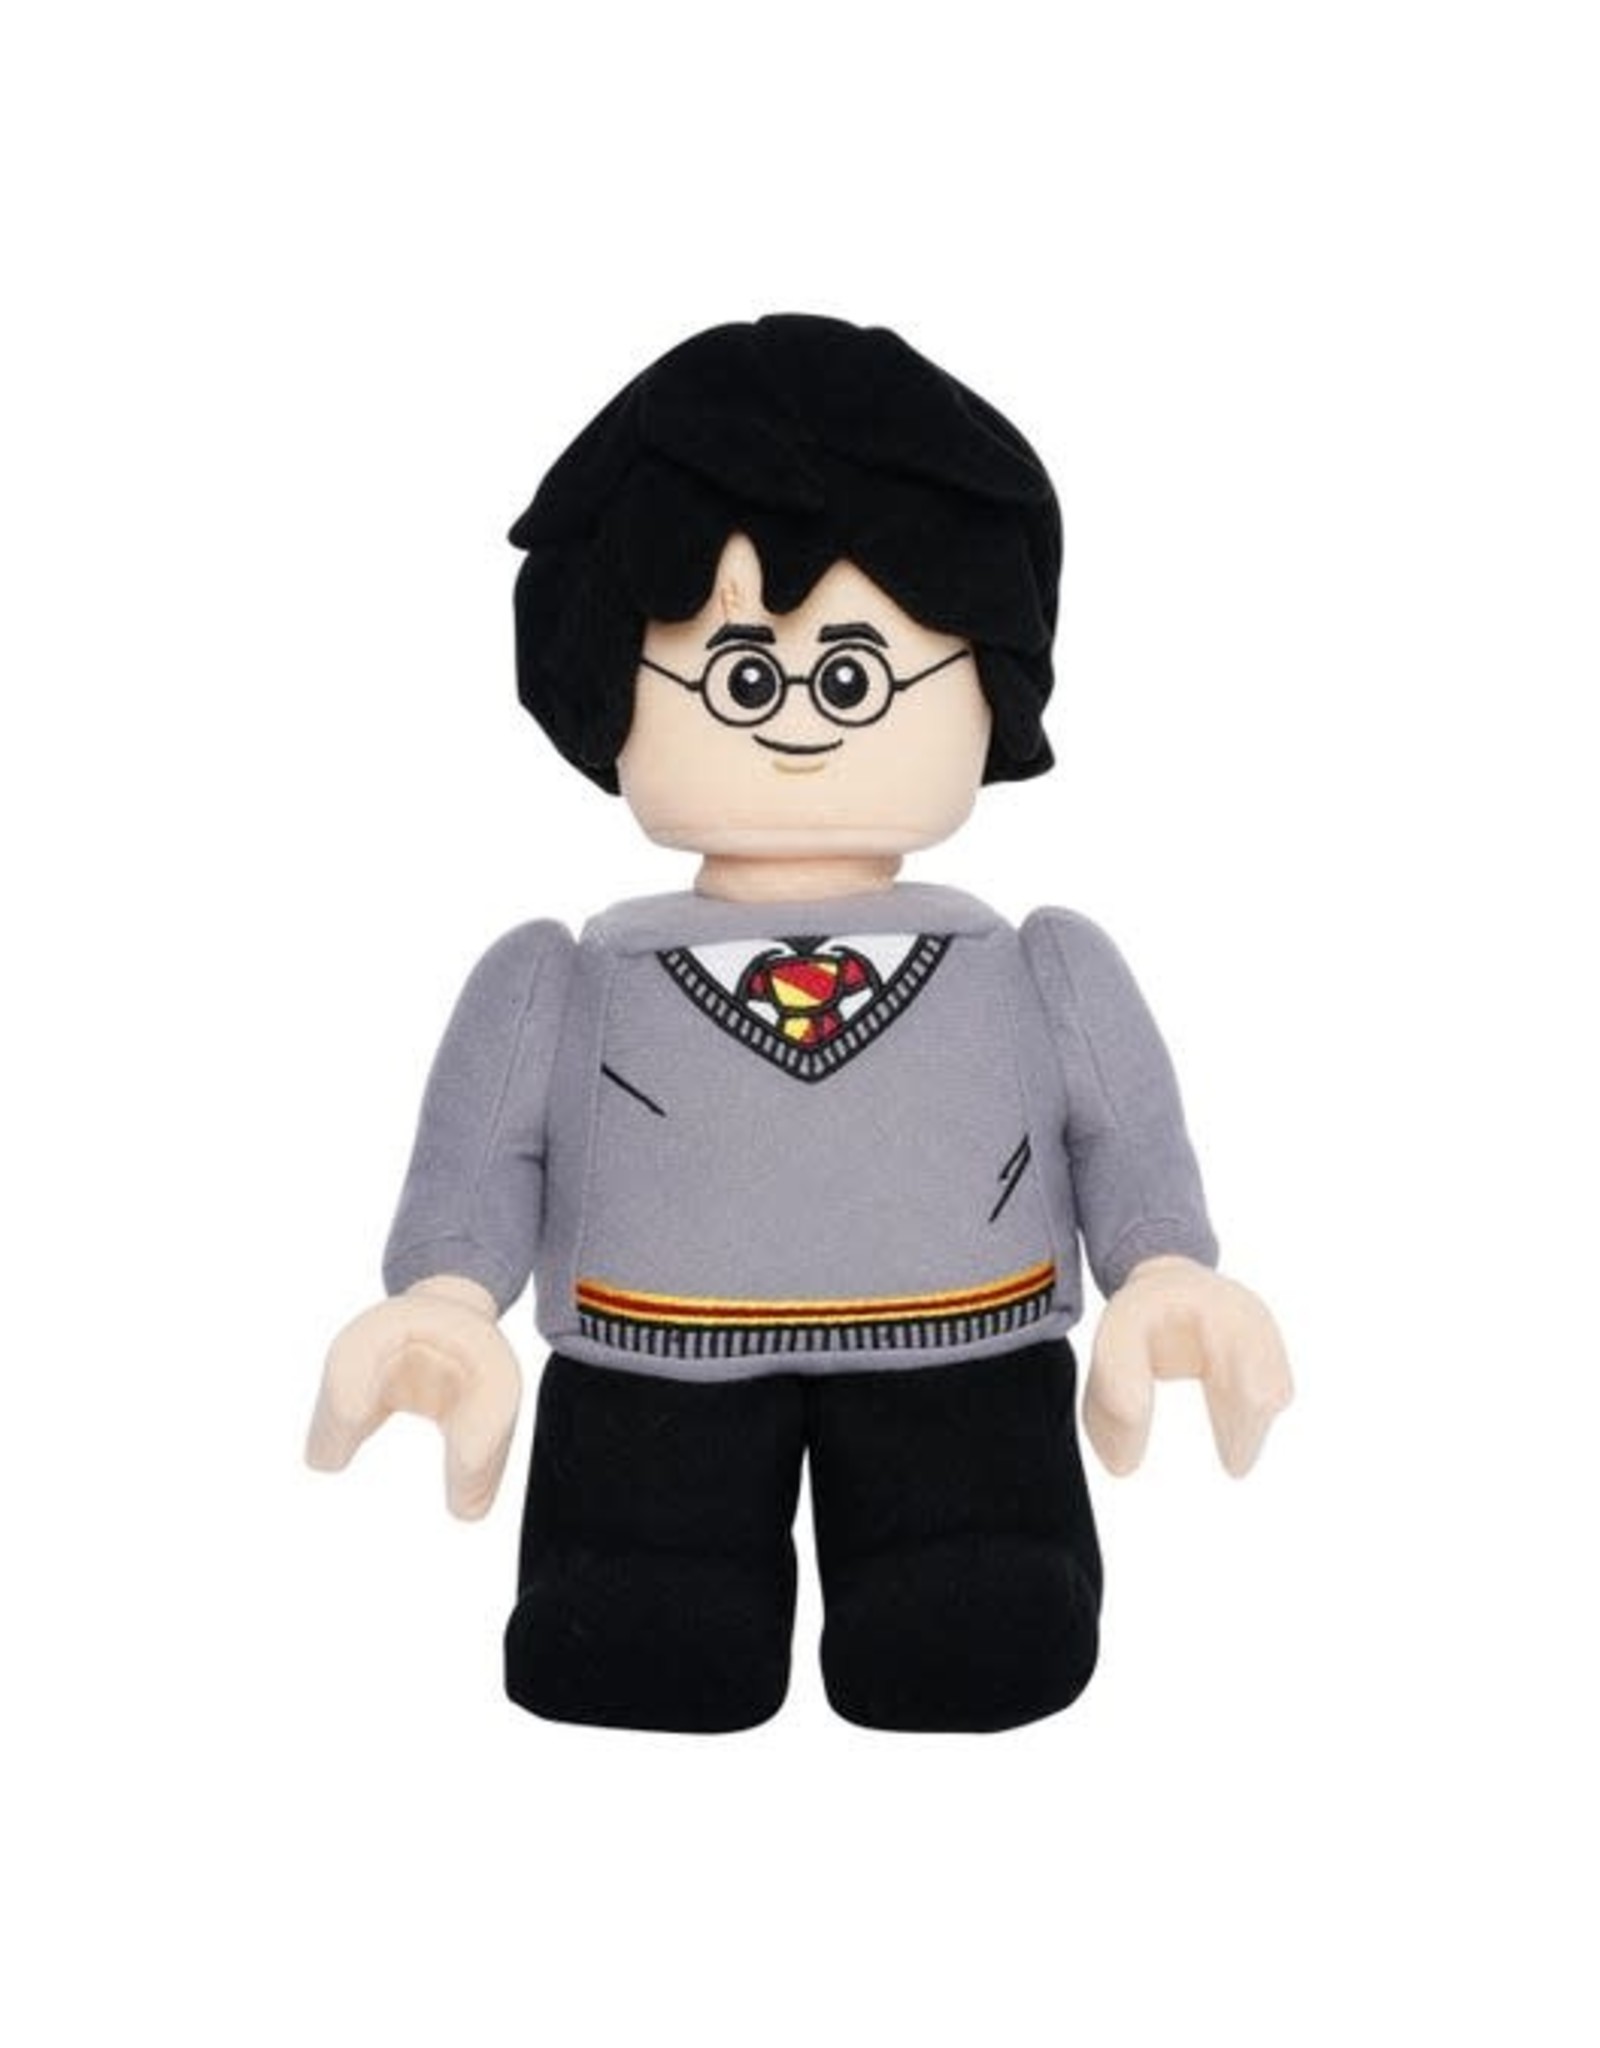 The Manhattan Toy Company LEGO Harry Potter Plush Minifigure